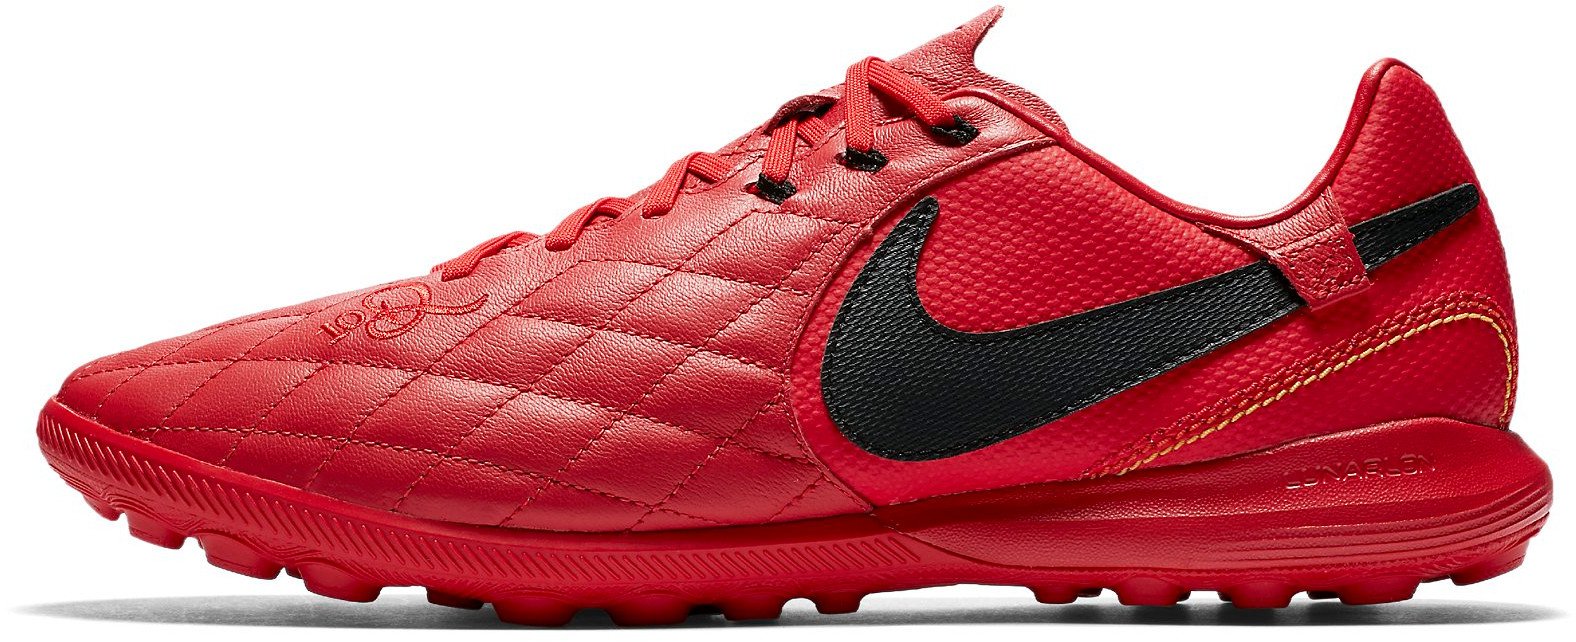 Football shoes Nike LUNAR LEGENDX 7 PRO 10R TF - Top4Football.com